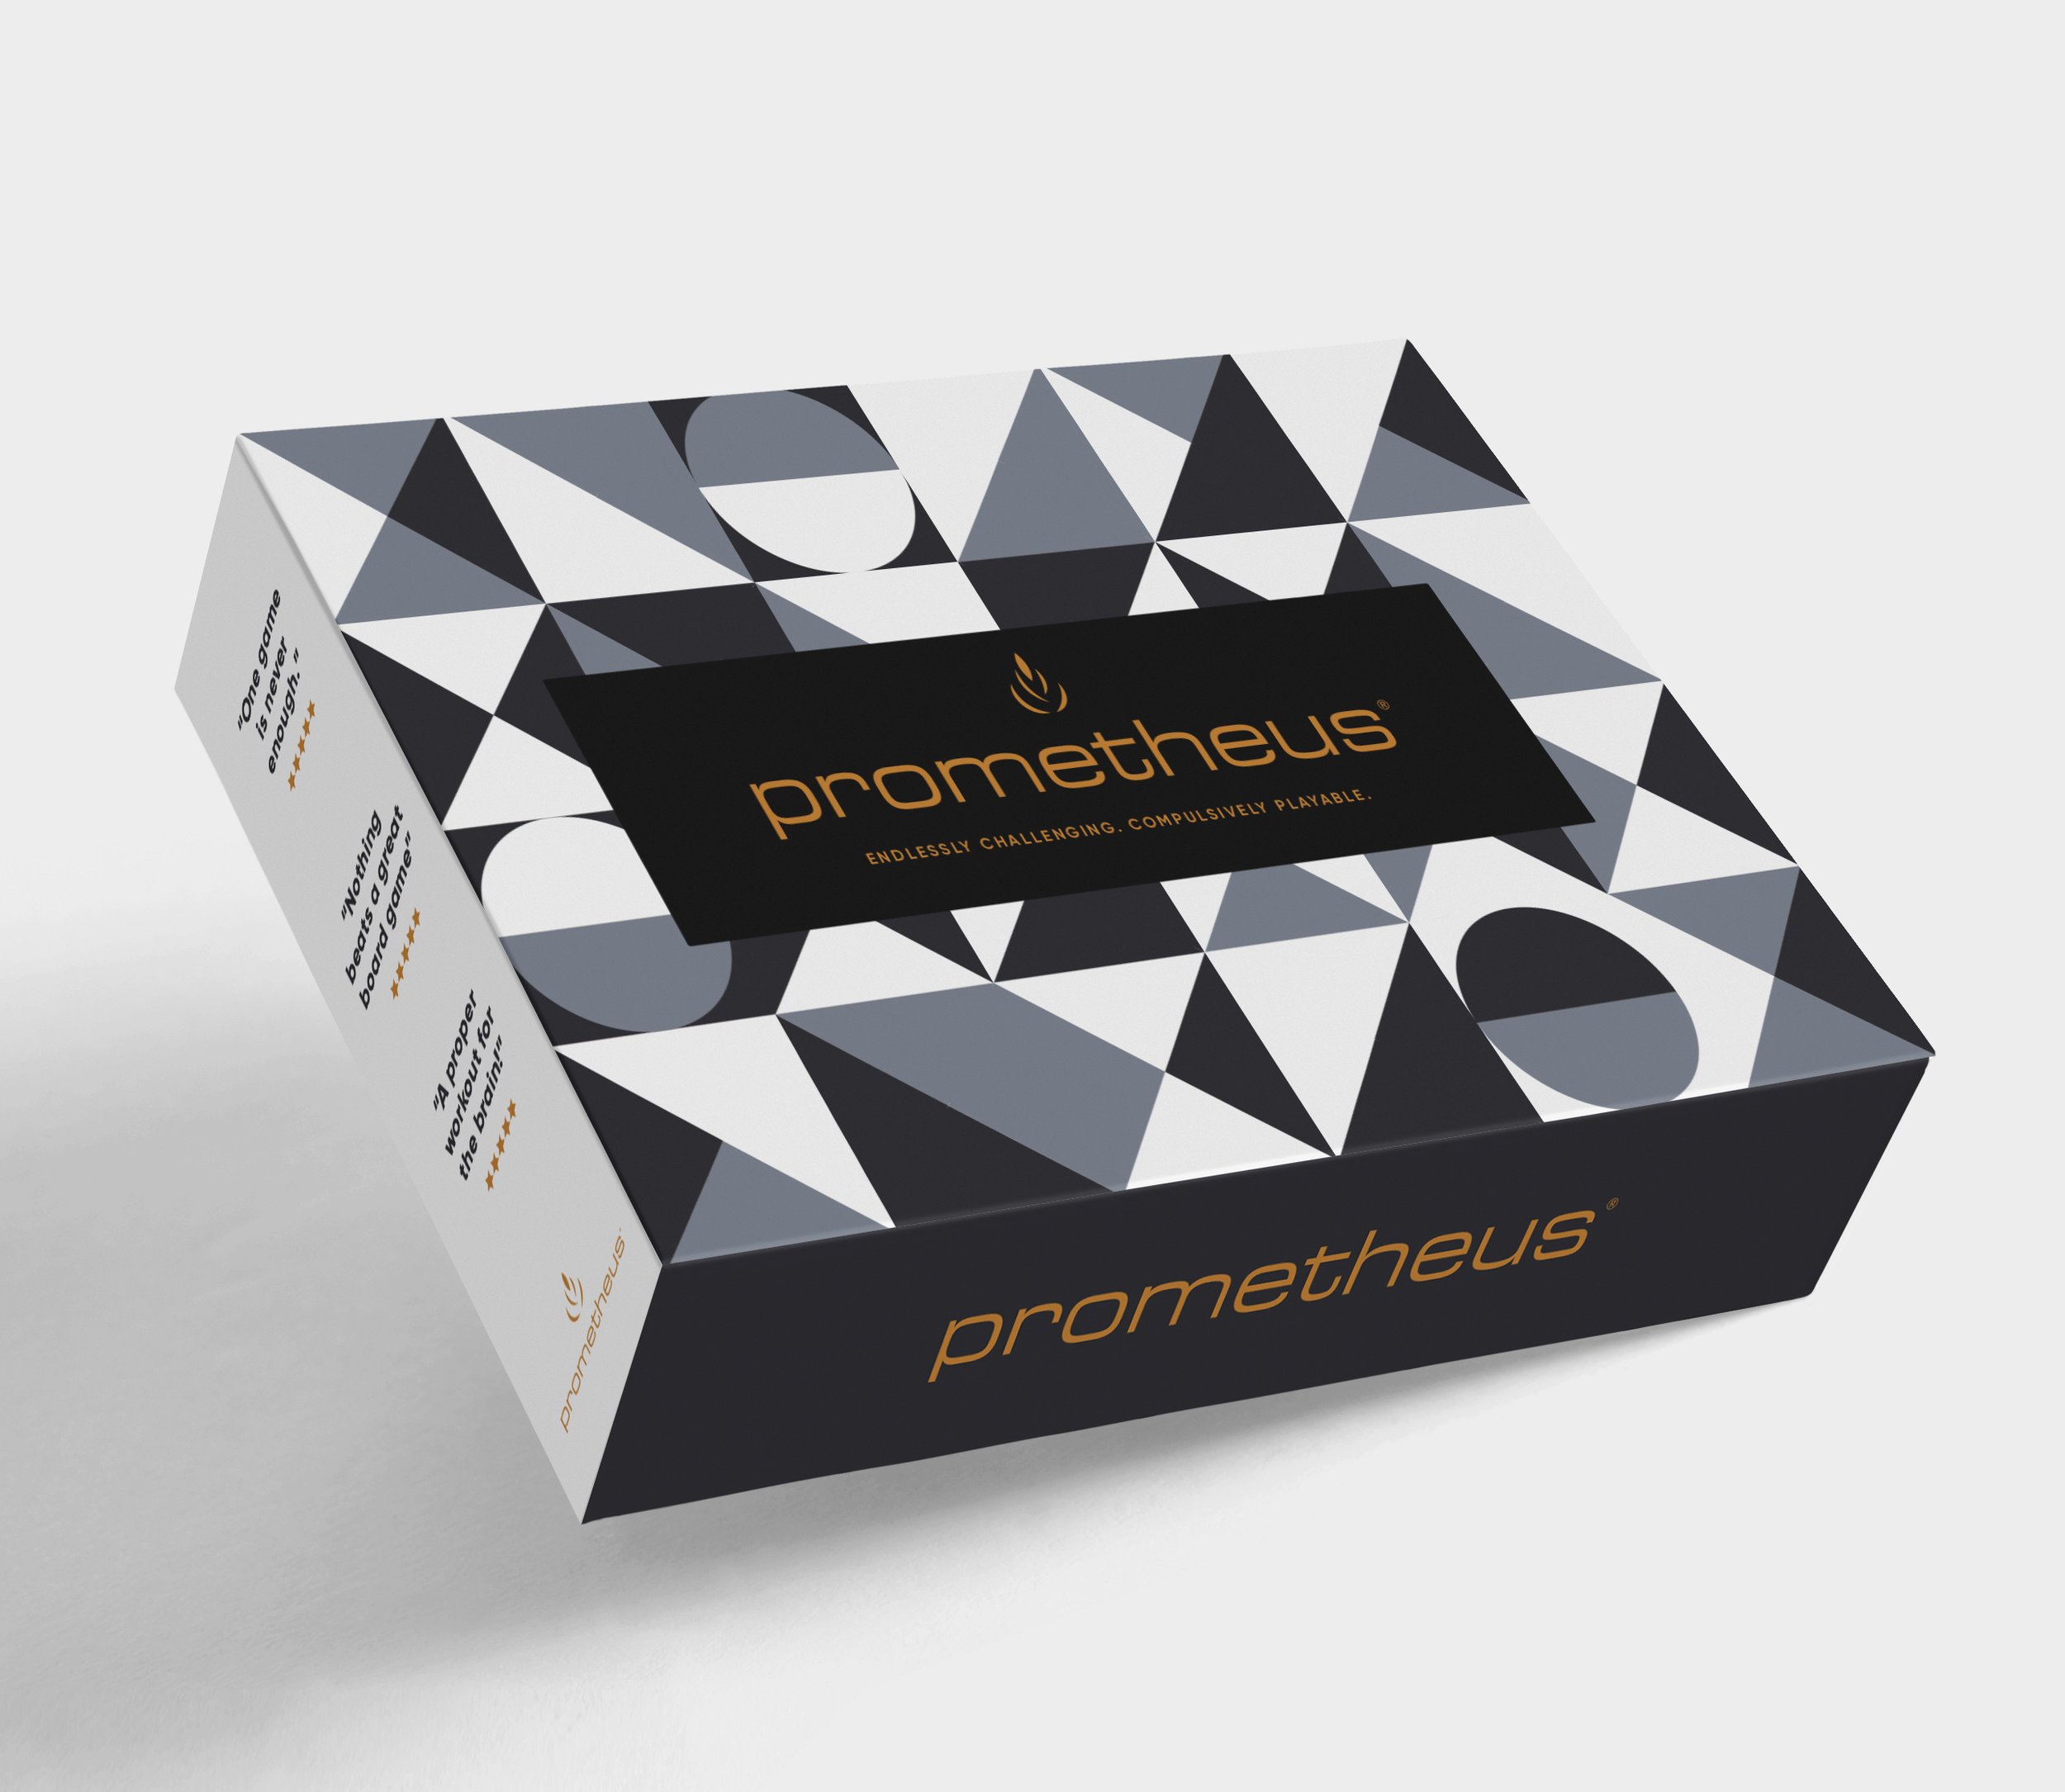 Prometheus_box.jpg